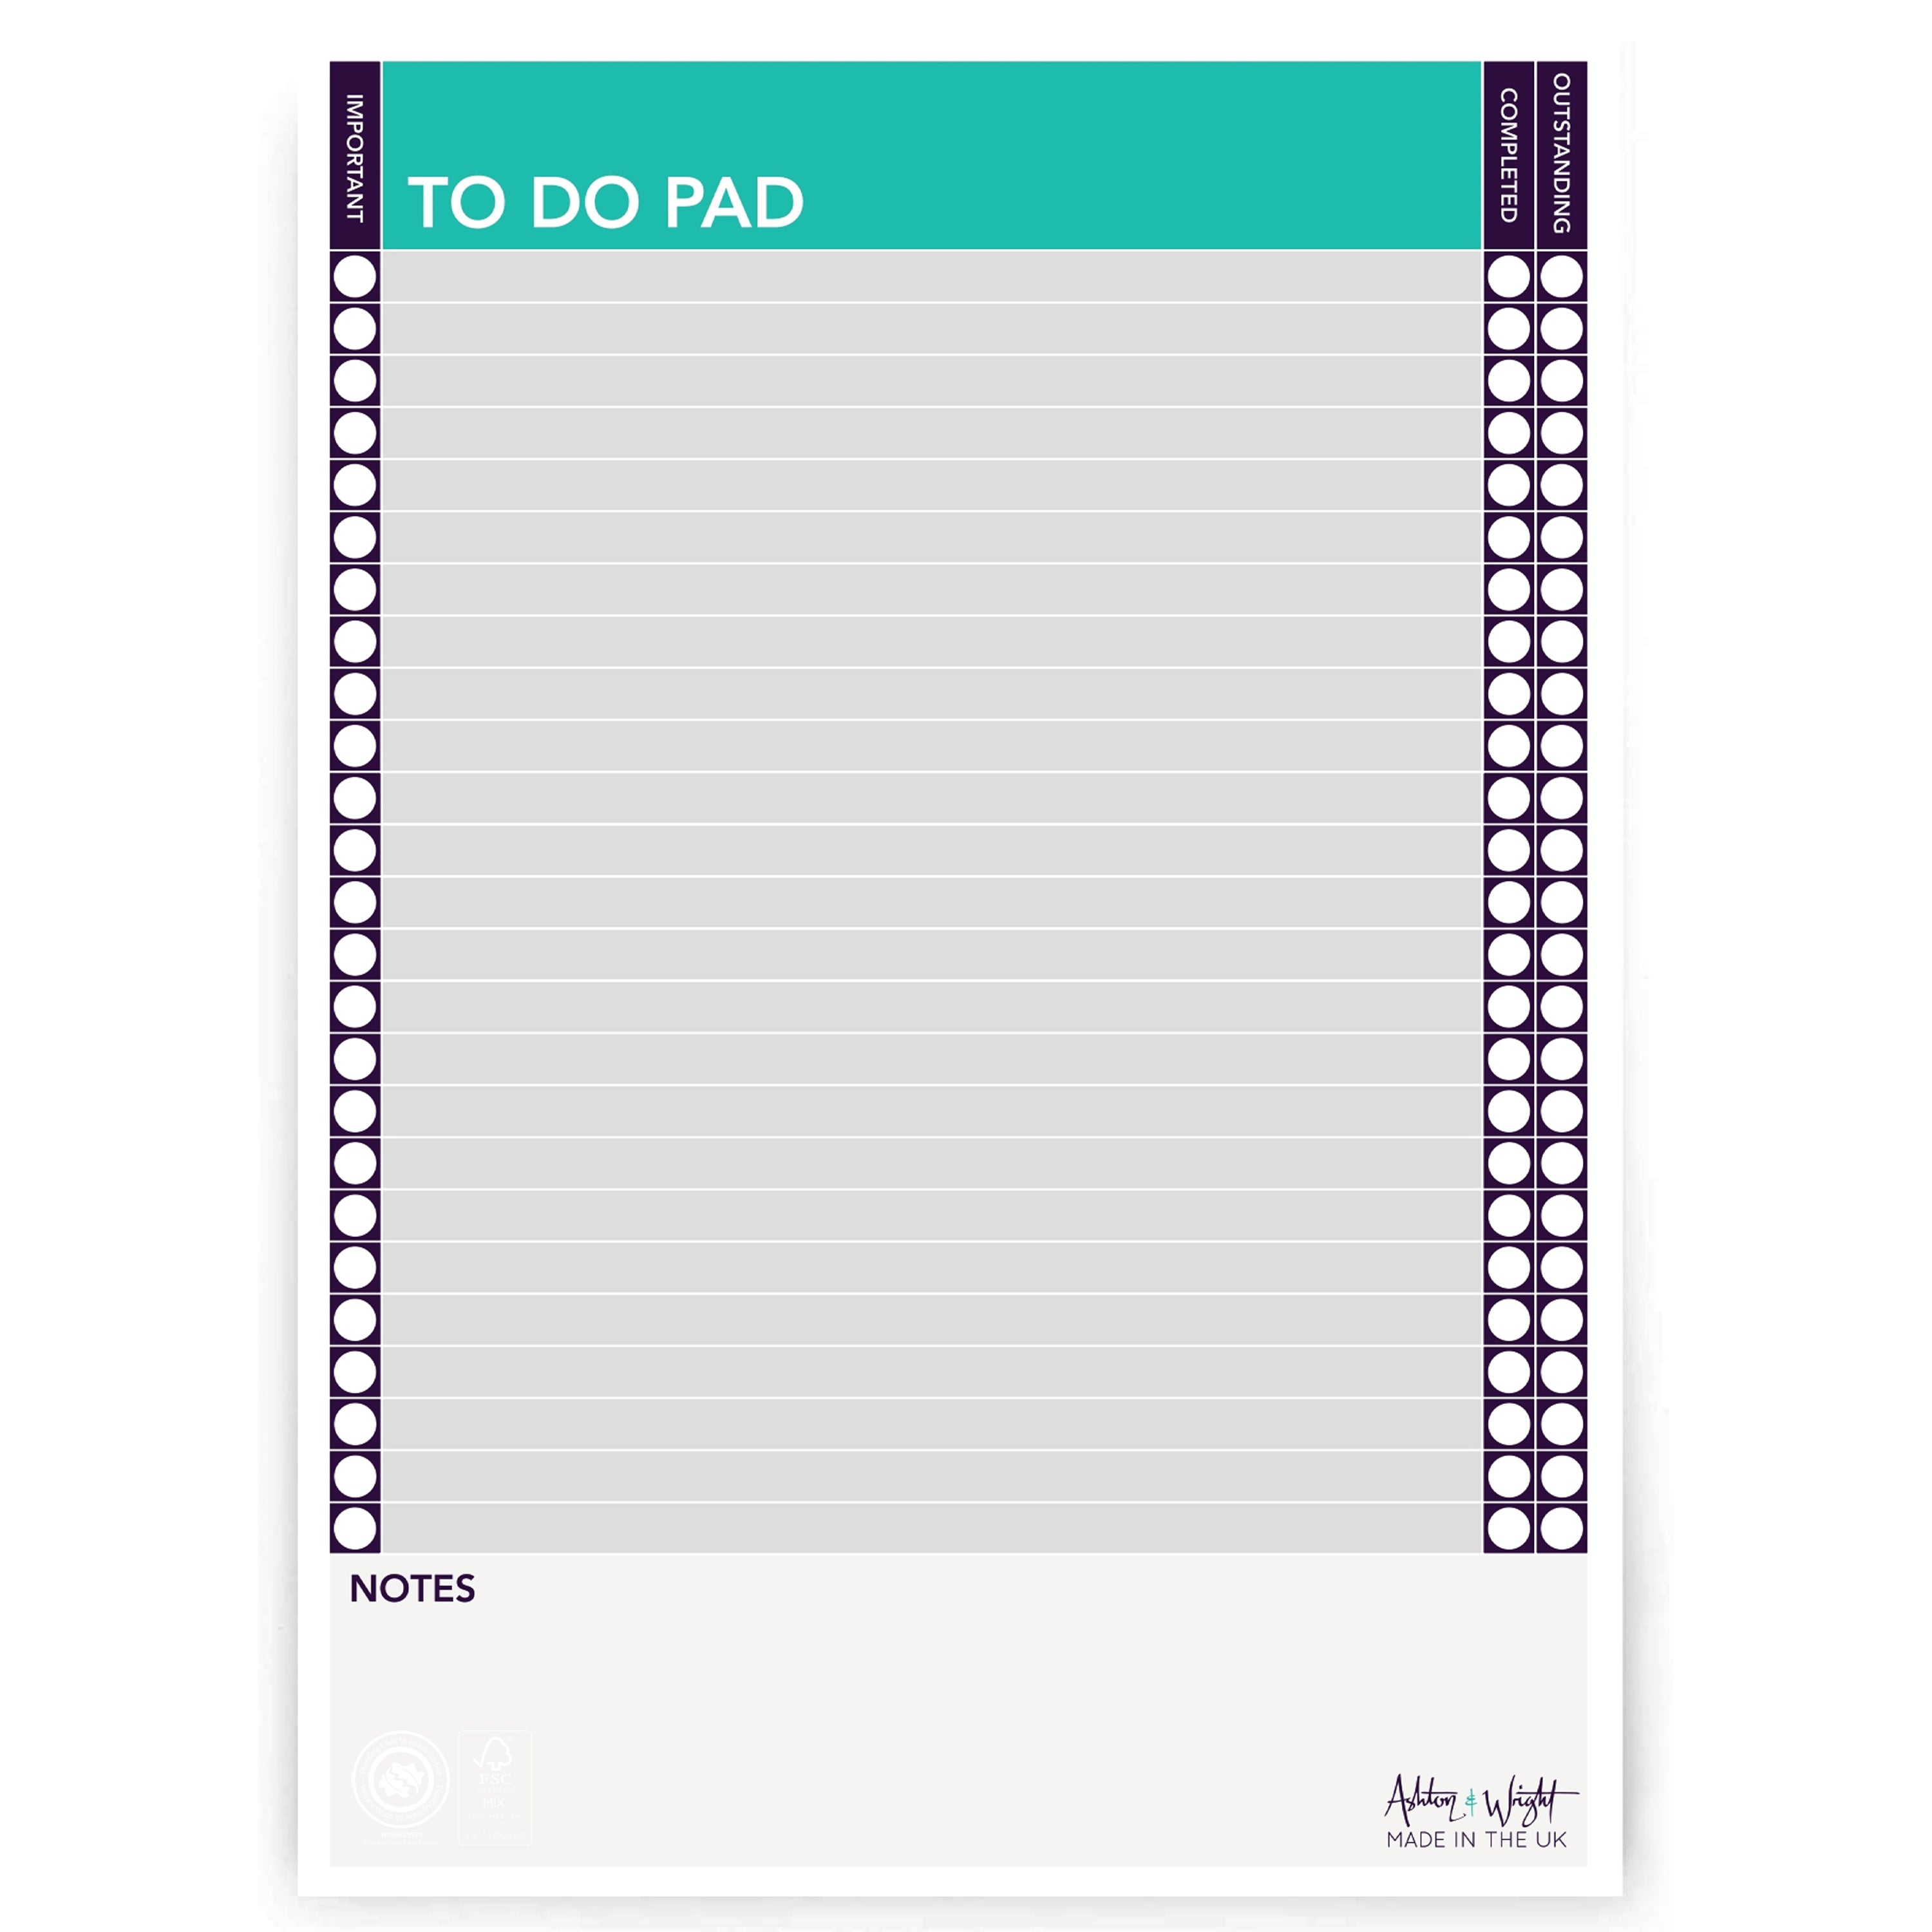 A4 to Do Pad Pad - Green & Purple